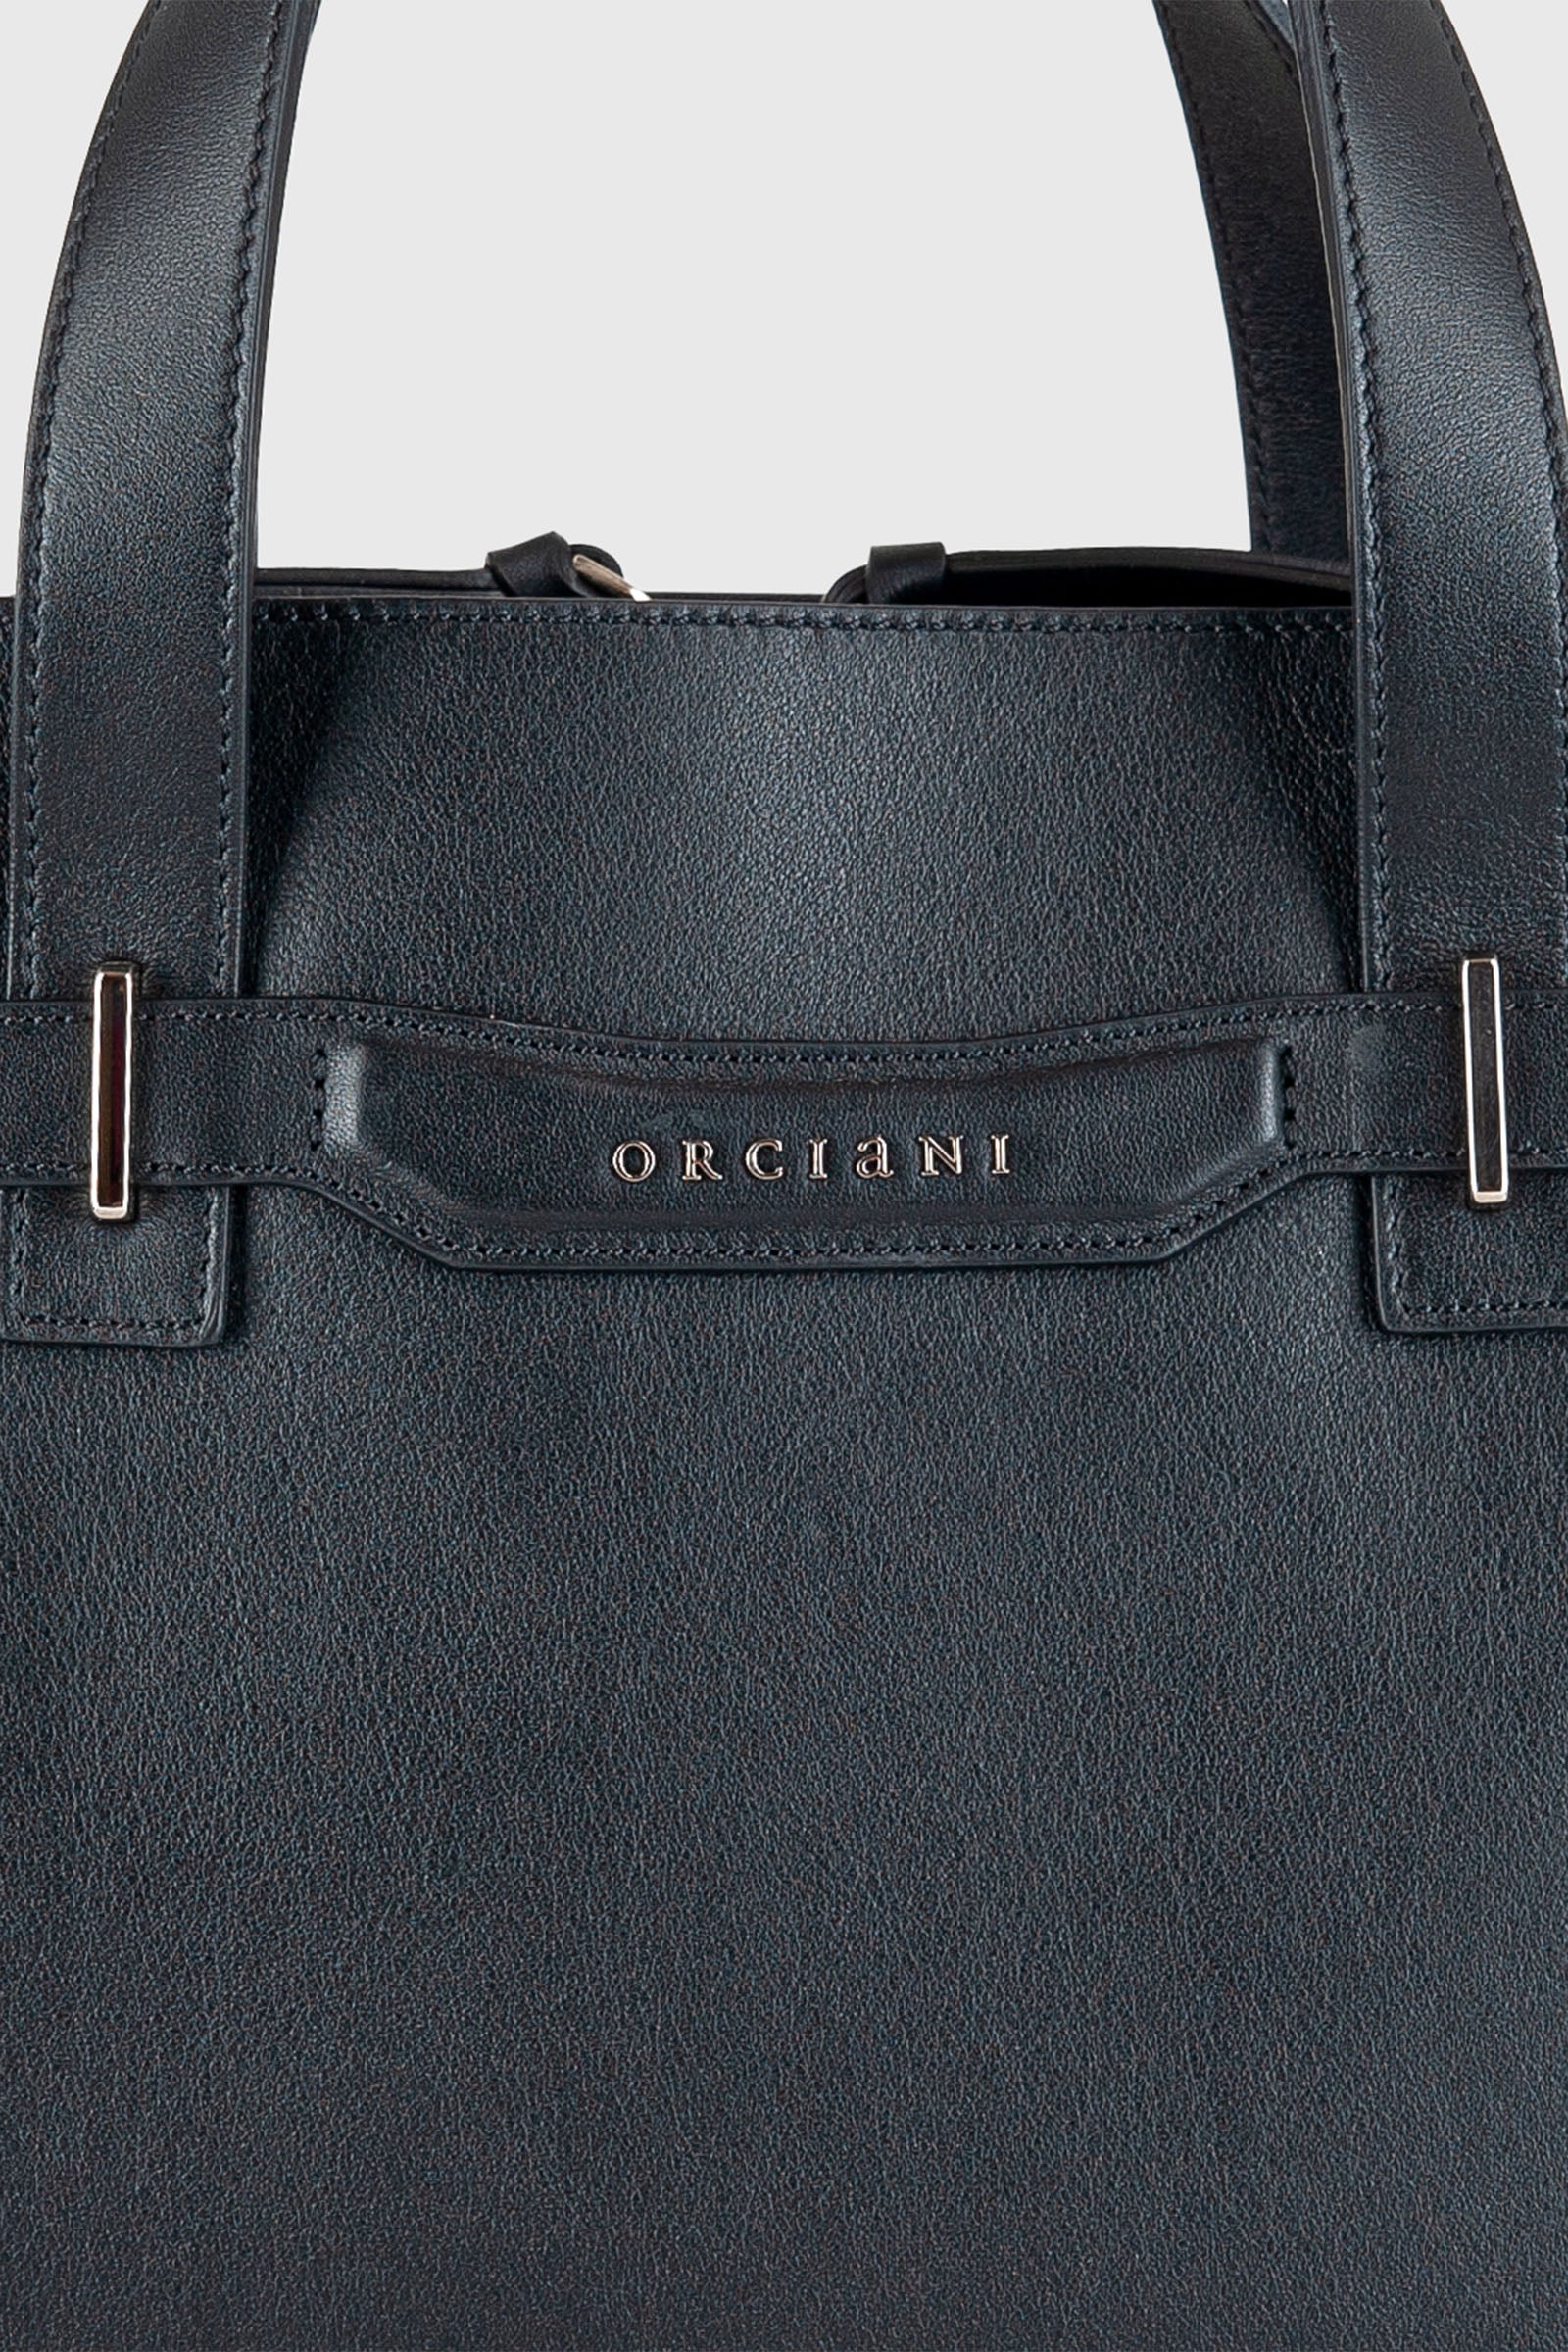 Orciani Leather Bag Black Out Black Woman B02147BLACK - 5